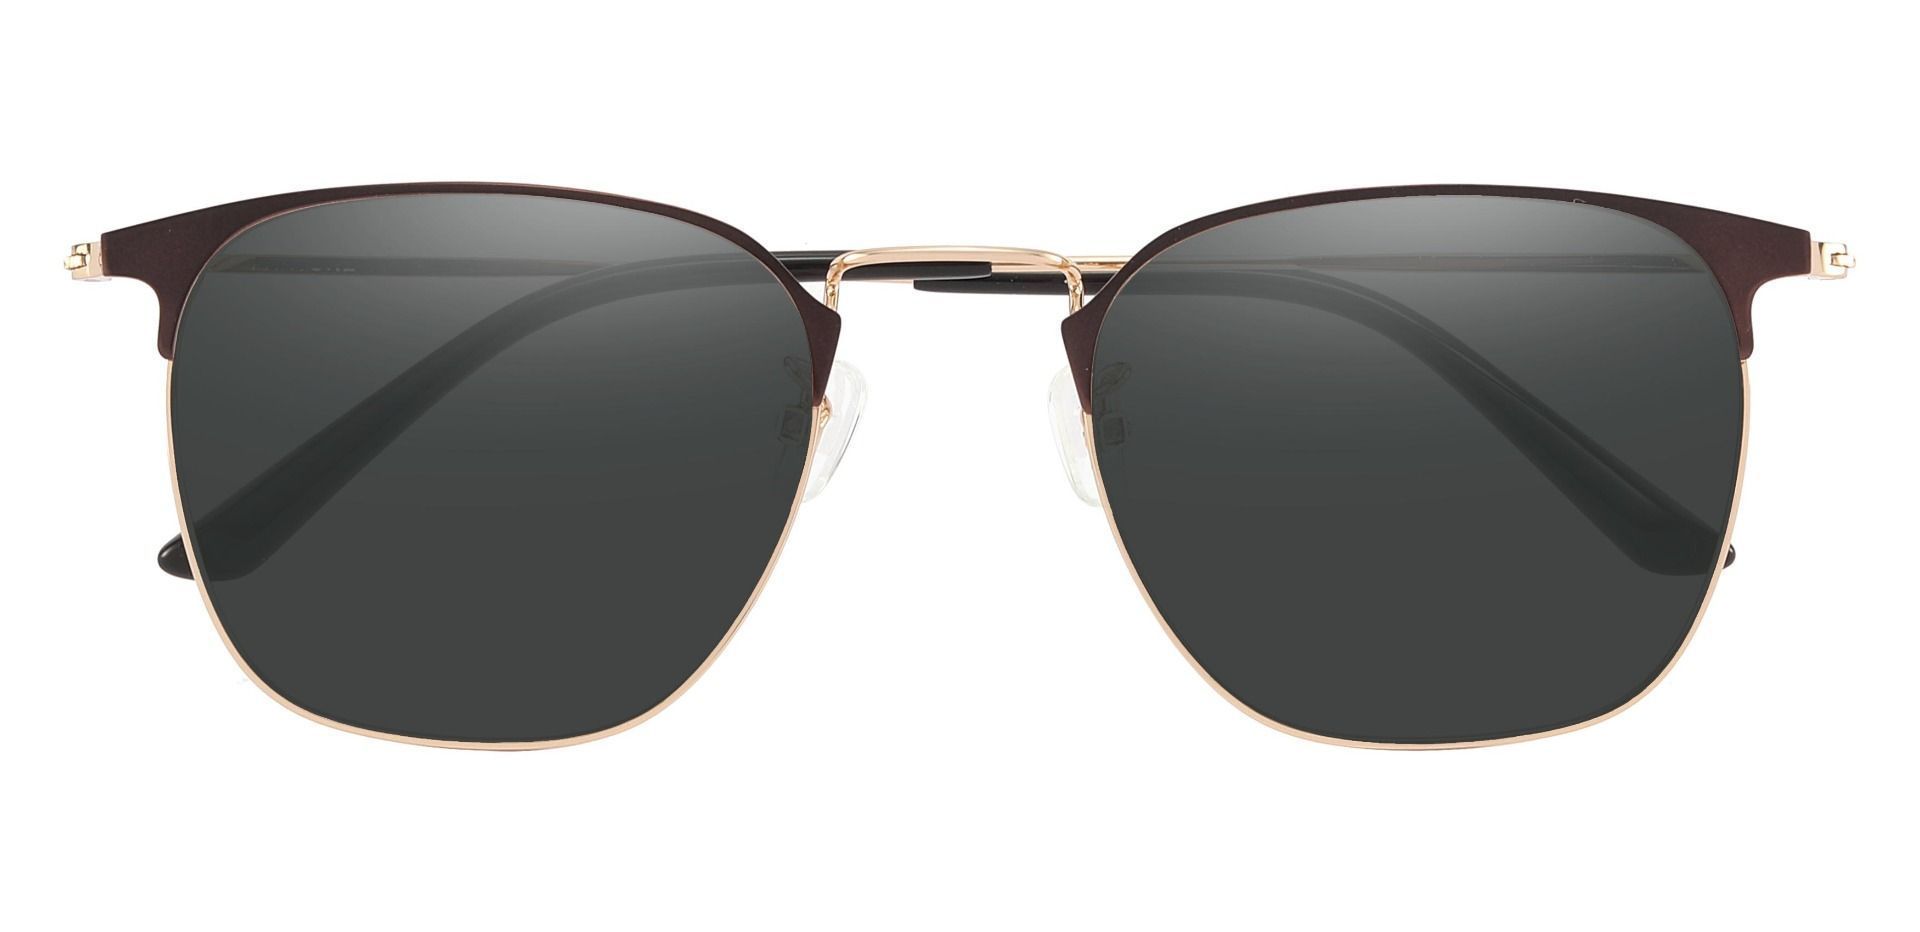 Nichols Browline Prescription Sunglasses - Brown Frame With Gray Lenses